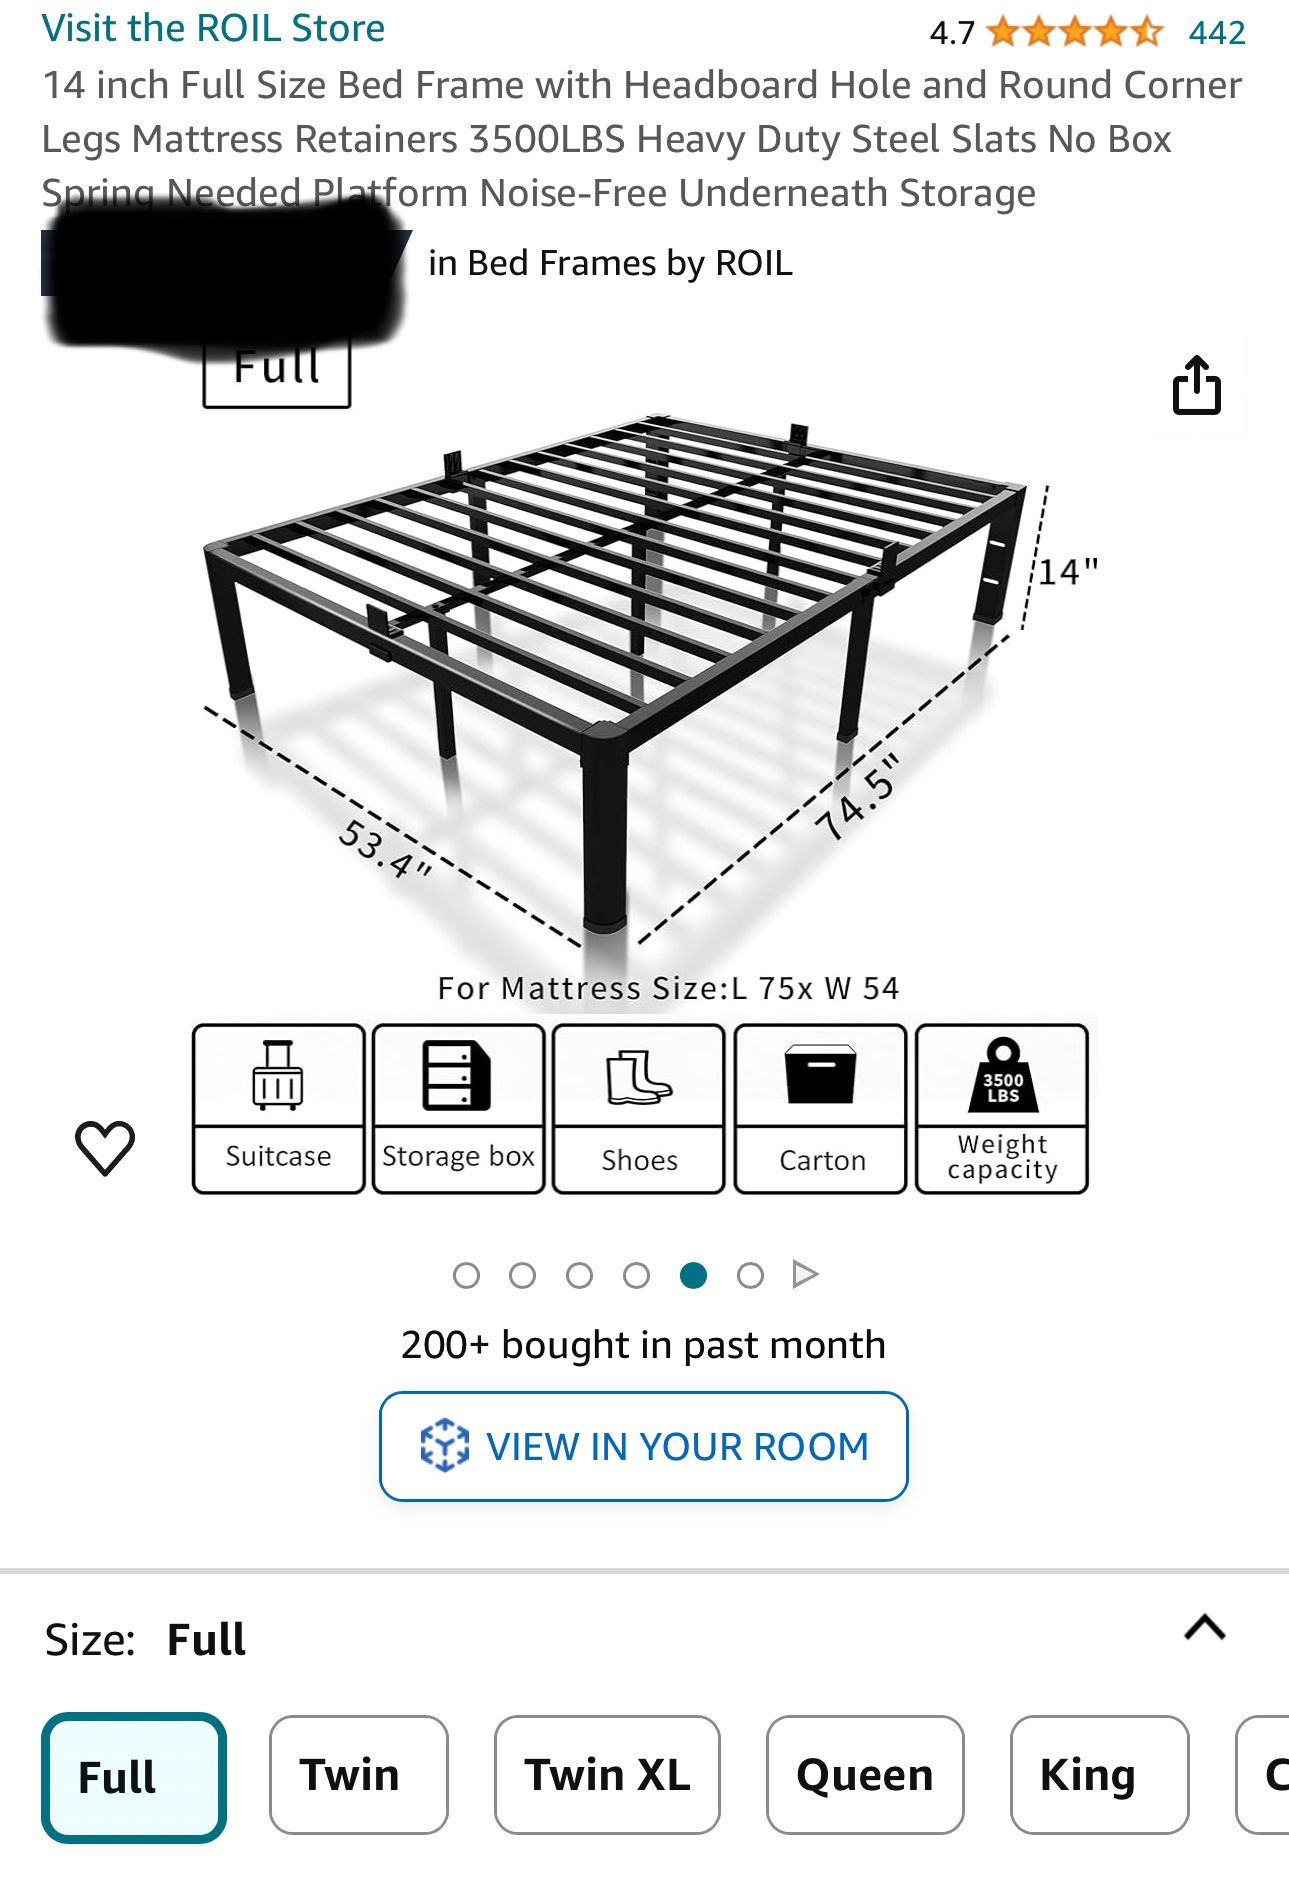 14” Full Size Heavy Duty Metal Bed Frame 